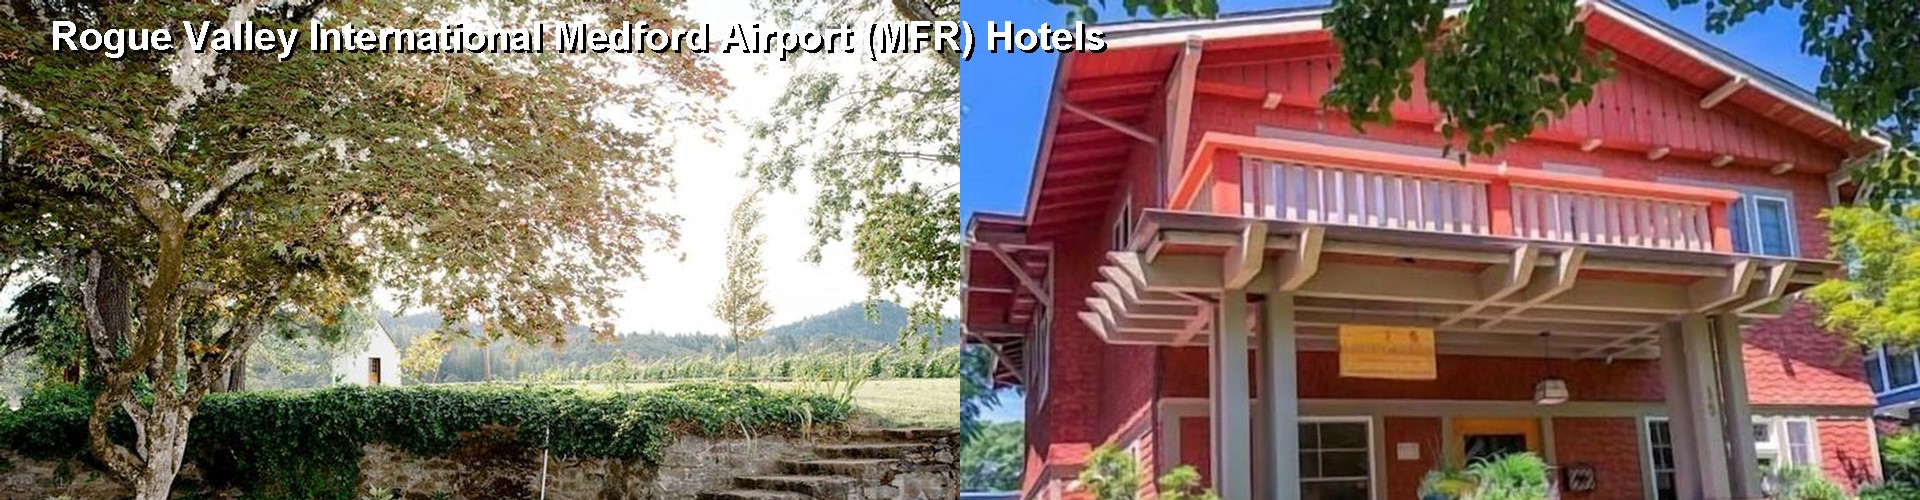 5 Best Hotels near Rogue Valley International Medford Airport (MFR)